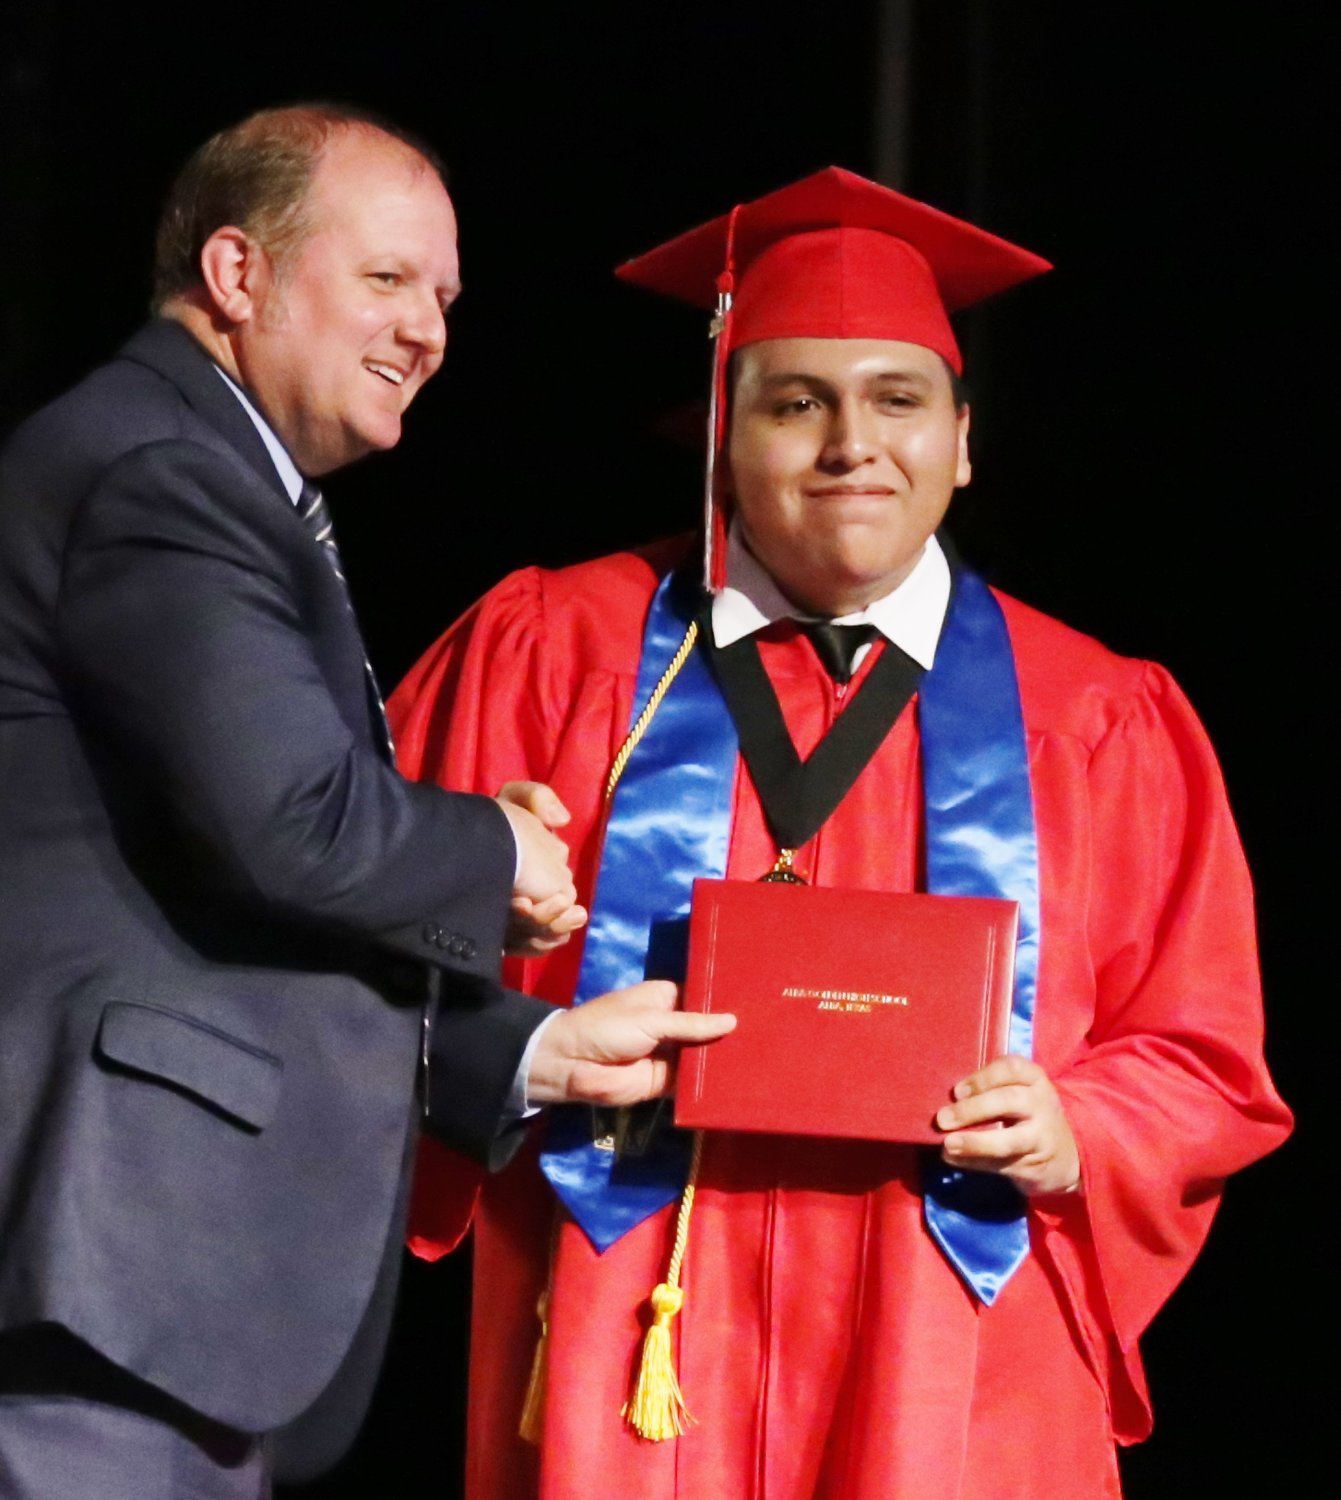 Alba-Golden honor graduate Jose Camacho receives his diploma from principal Michael Mize.